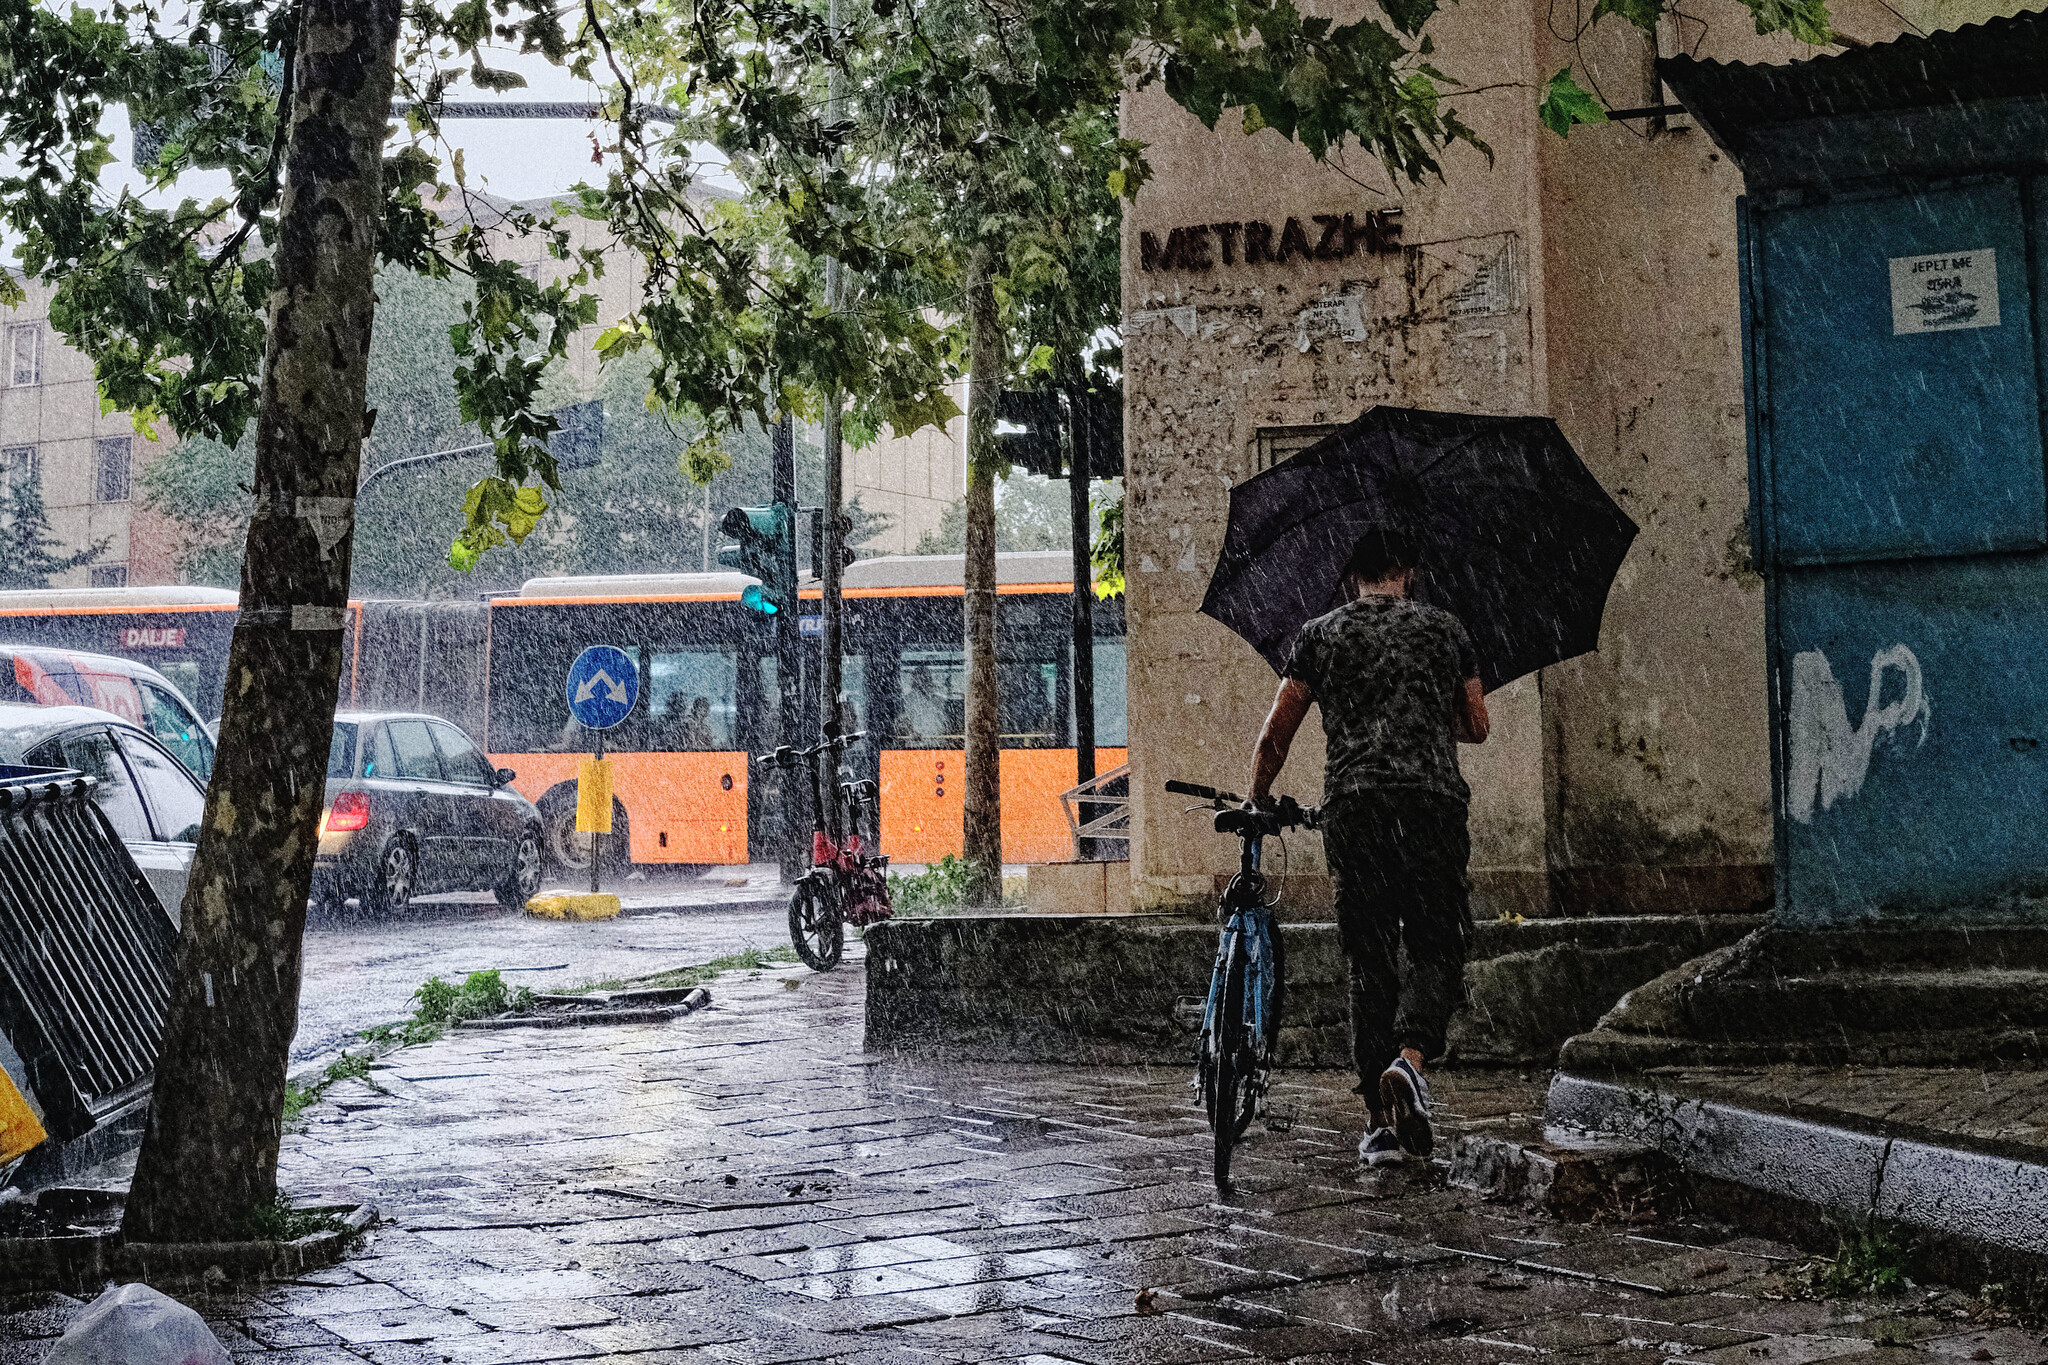 Rainstorm on a Thursday evening in Tirana, Albania